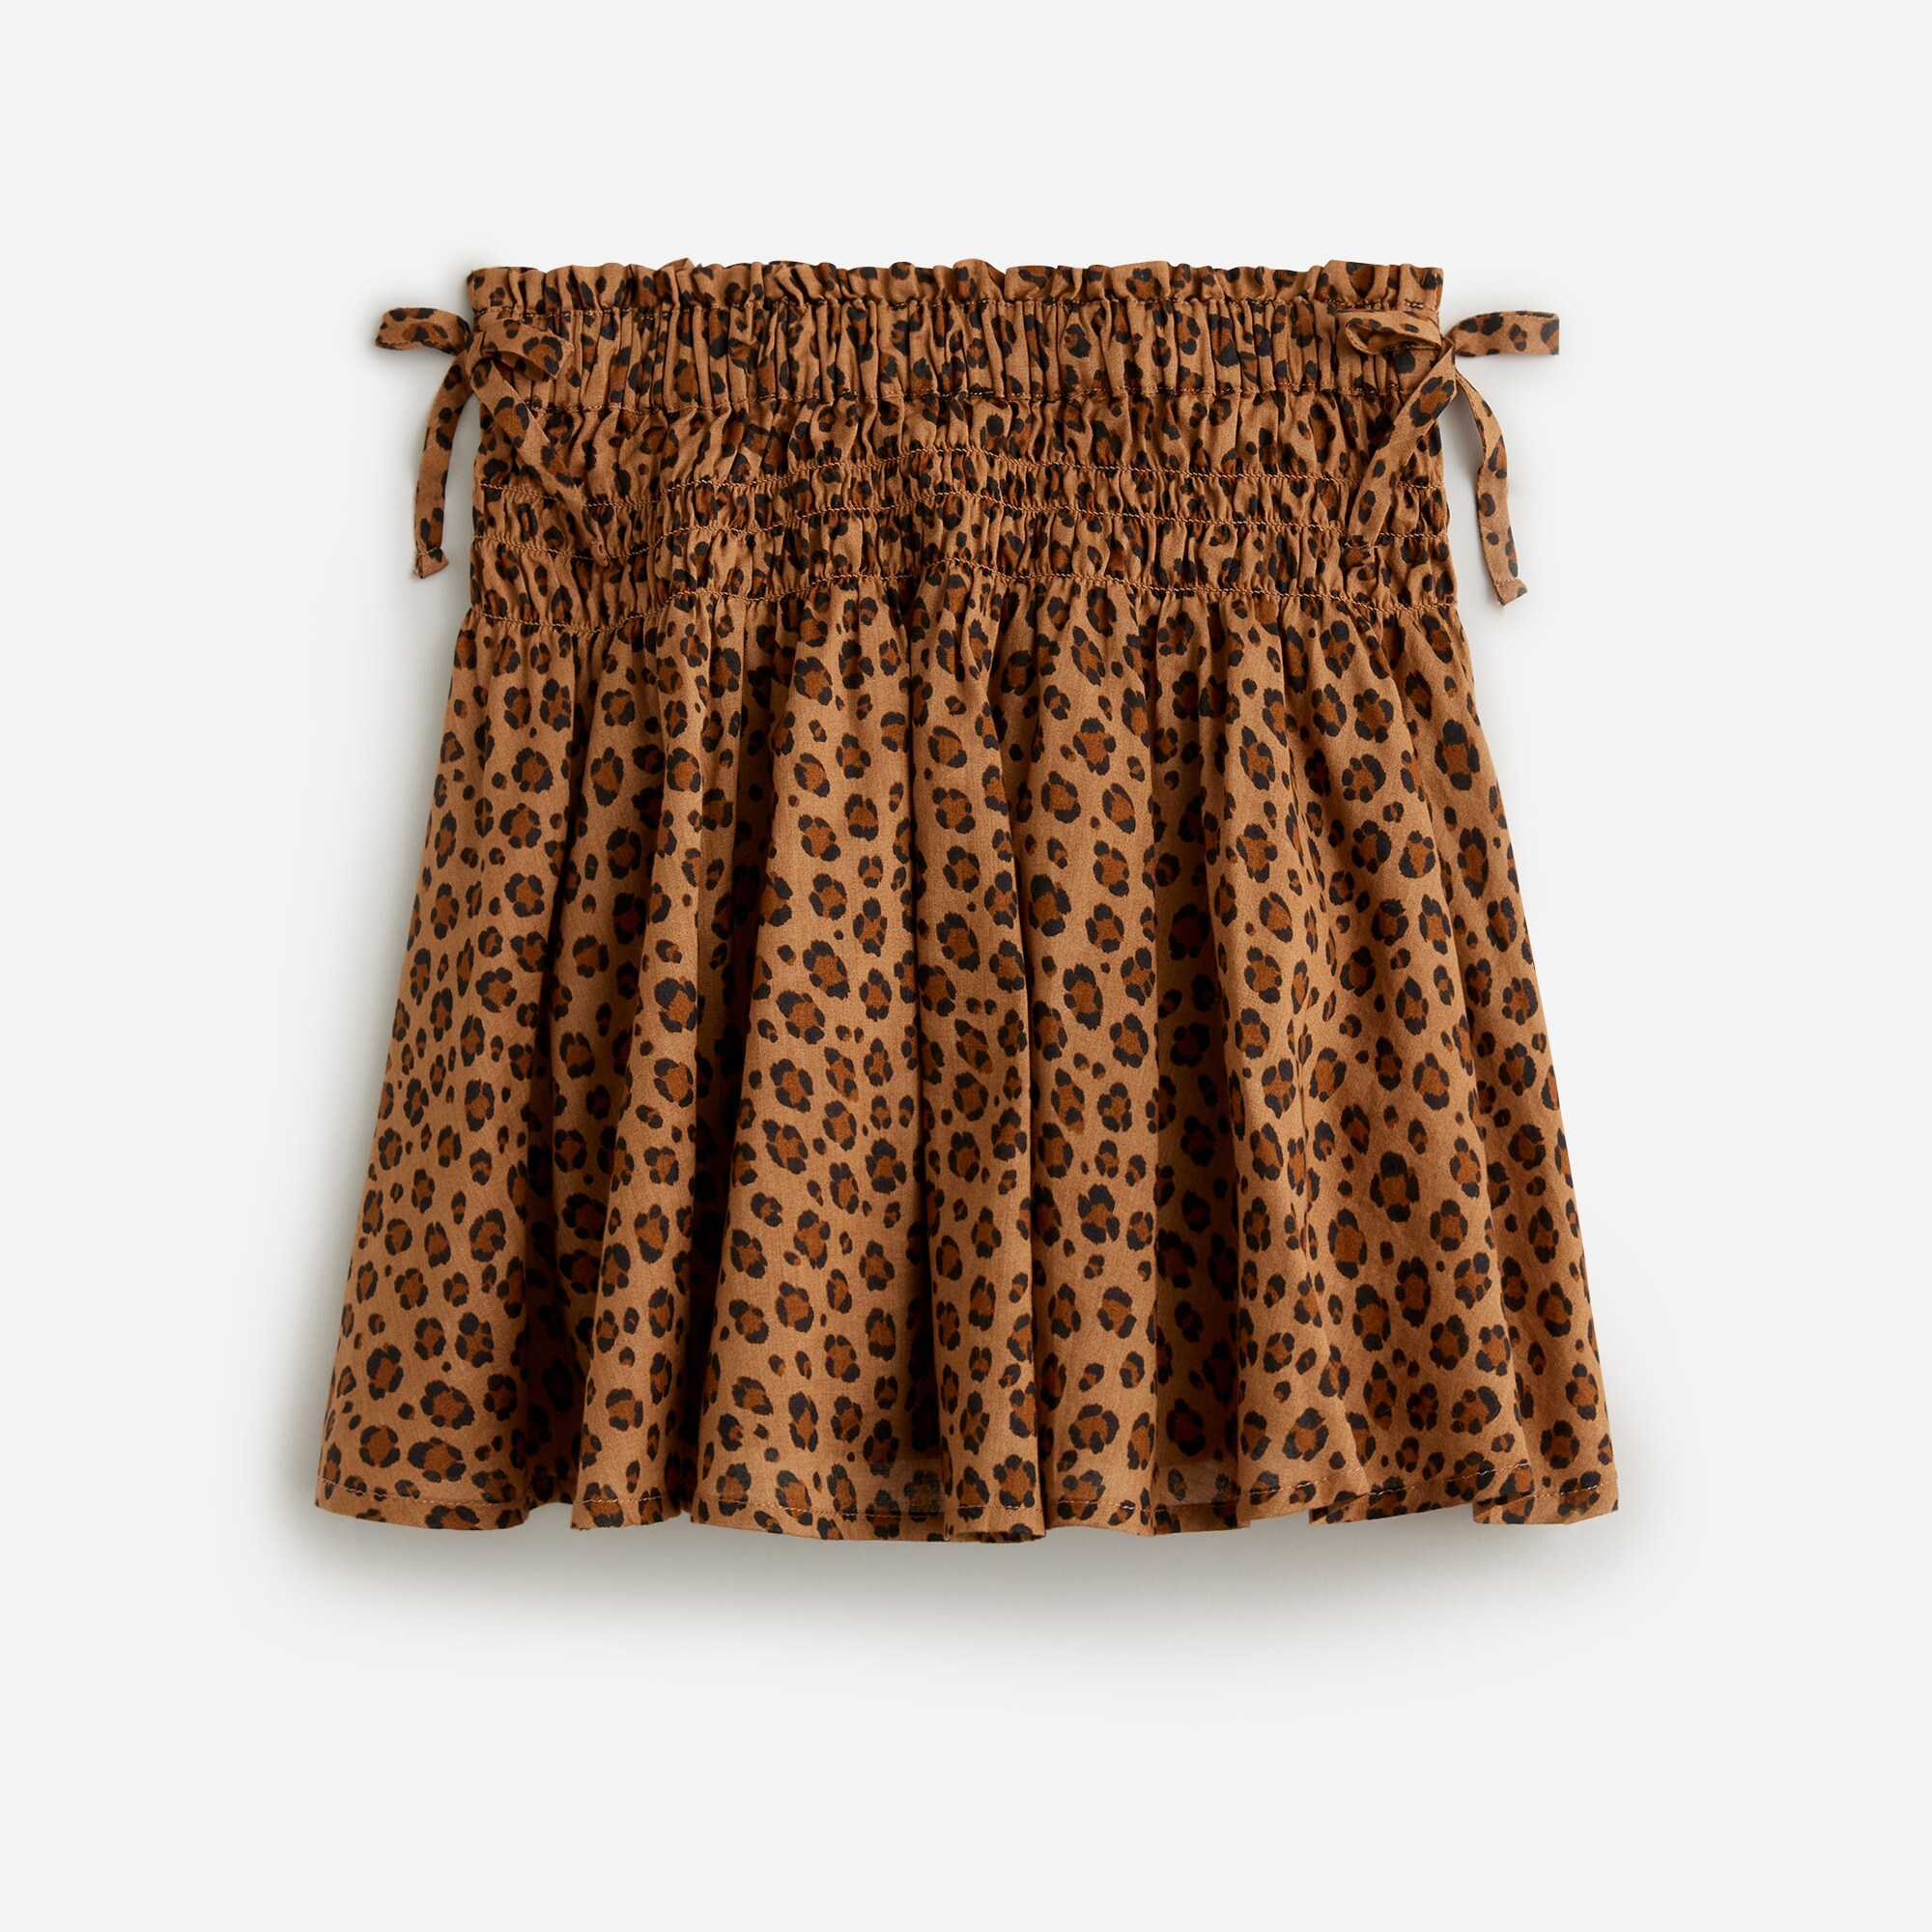  Girls' smocked-waist flouncy skirt in leopard print